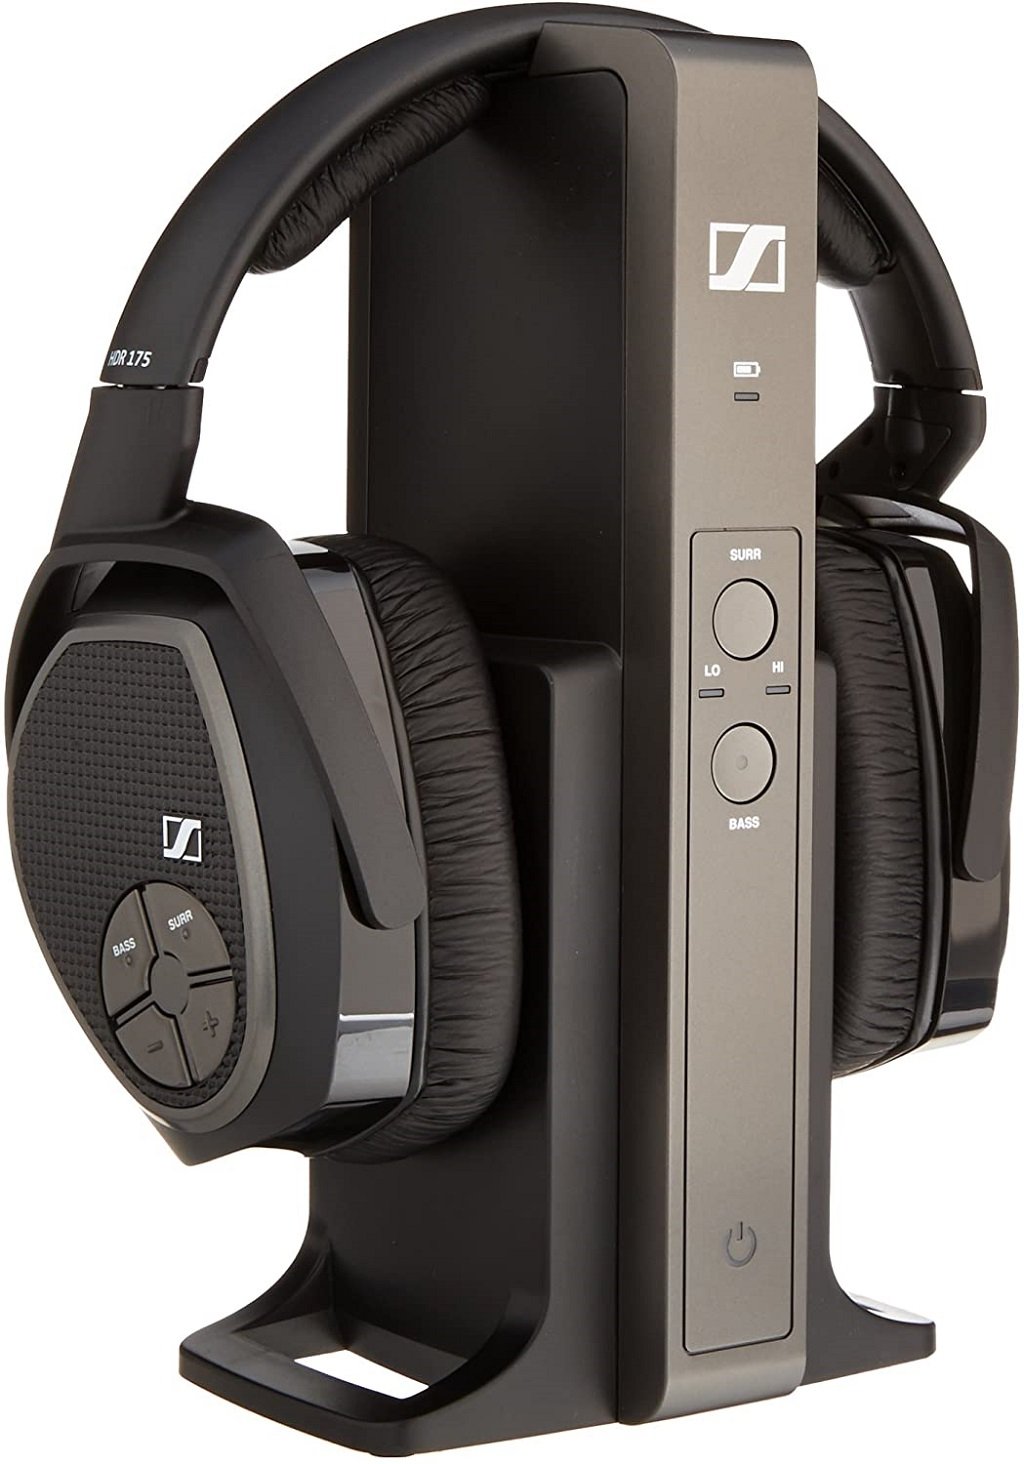 13. Best Budget Bass Headphones: Sennheiser RS 175 RF Wireless Headphone System at Amazon